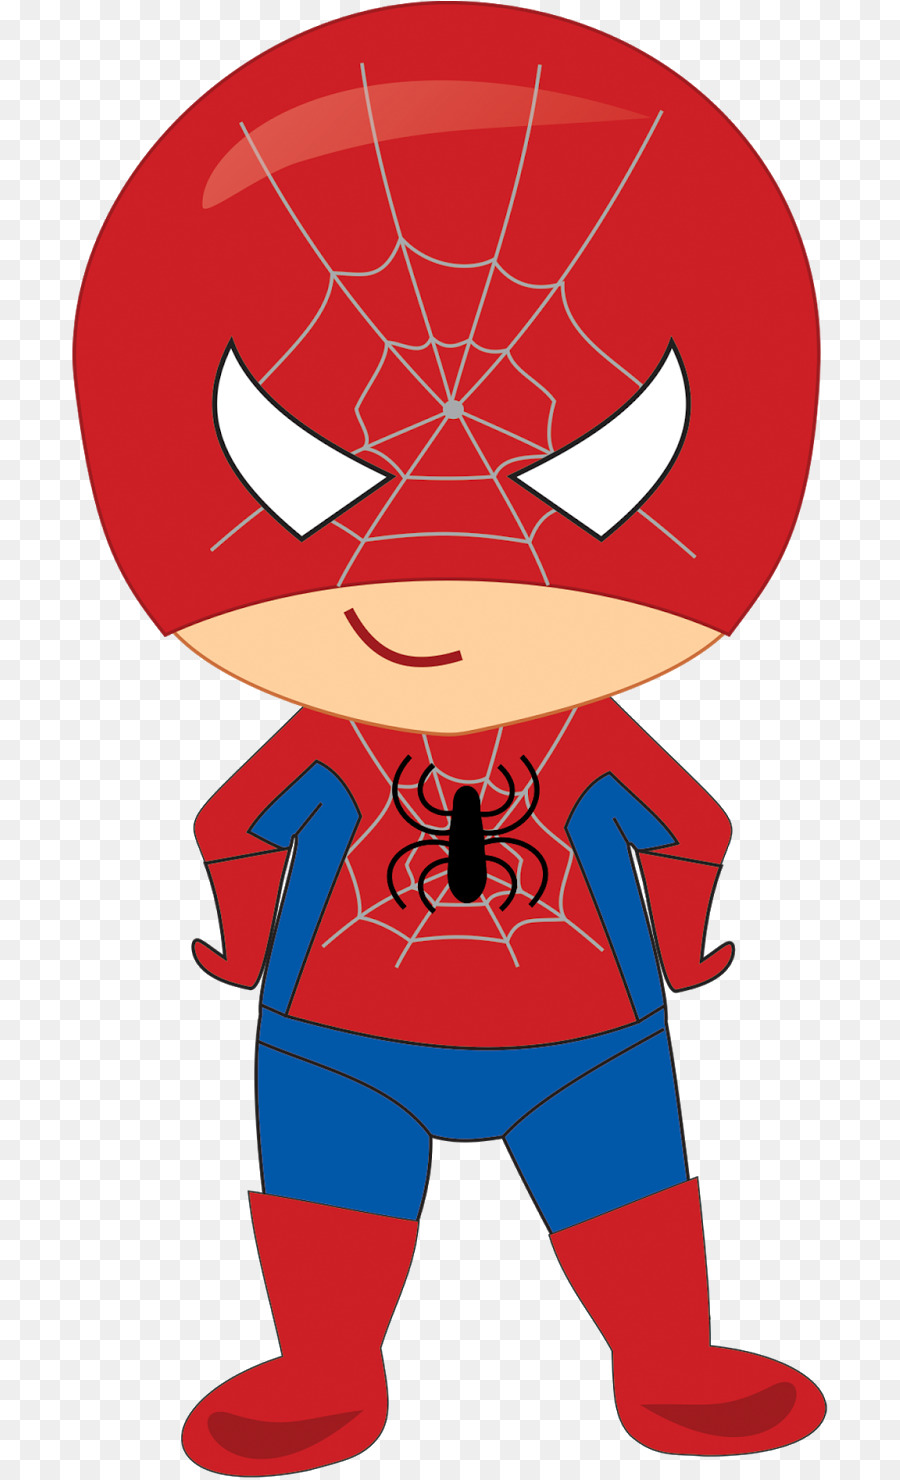 Clip art Superhero Wonder Woman Spider-Man Captain America - magneto png vector png download - 757*1478 - Free Transparent Superhero png Download.